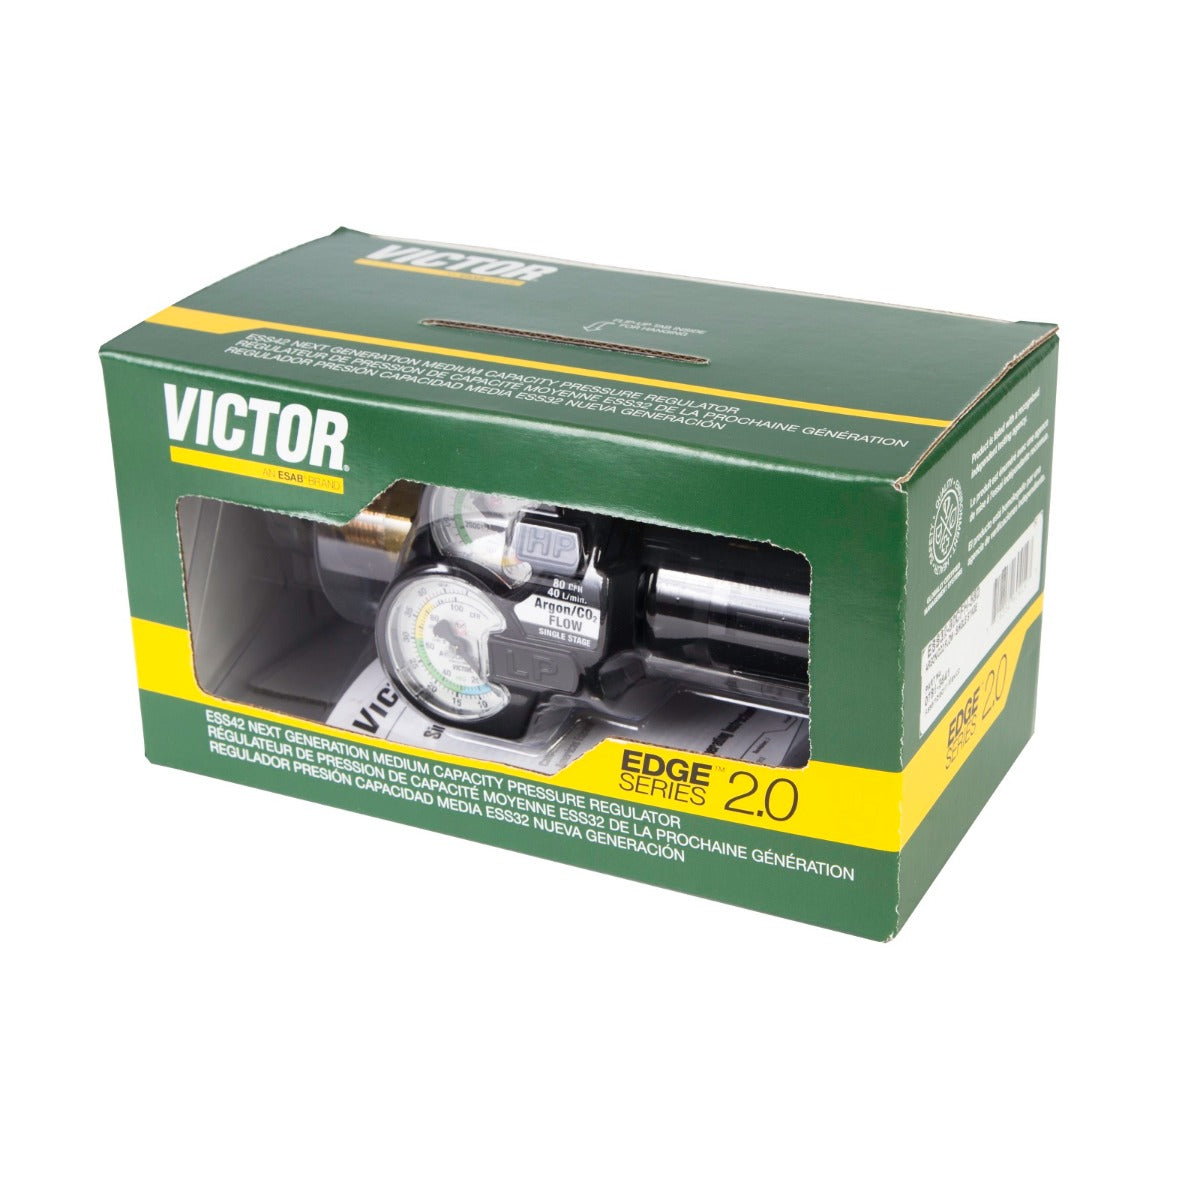 Victor Medium Duty Edge 2.0 Series ESS32 Inert Gas Regulator (0781-3641)